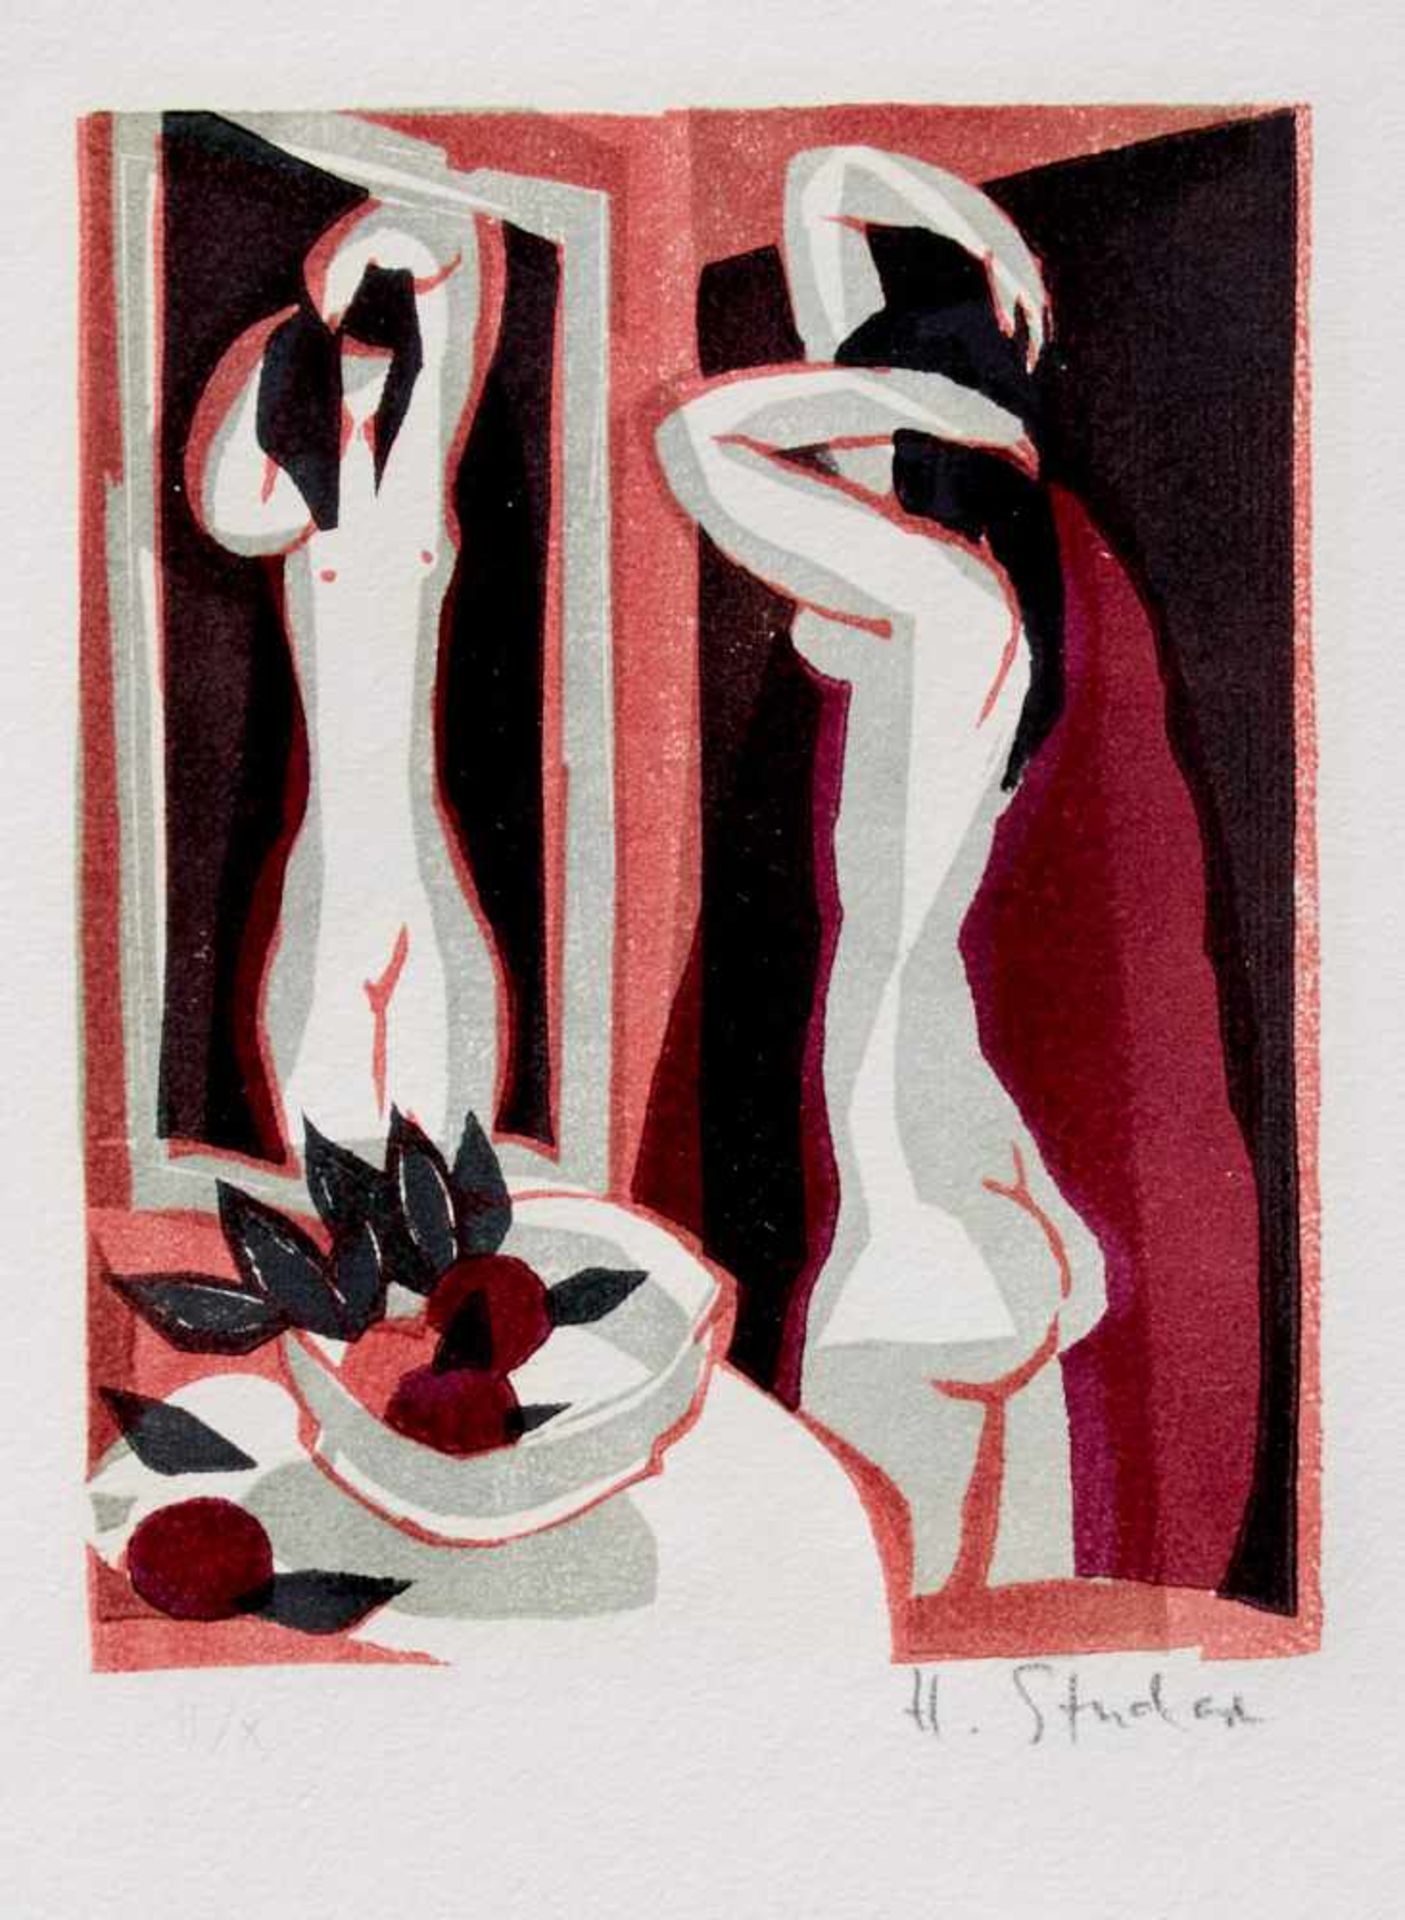 Arcade-Presse - Studer - Petrarca, F.,Sonette. Zrich (1966). 27 x 18,6 cm. Mit 9 - Bild 5 aus 6